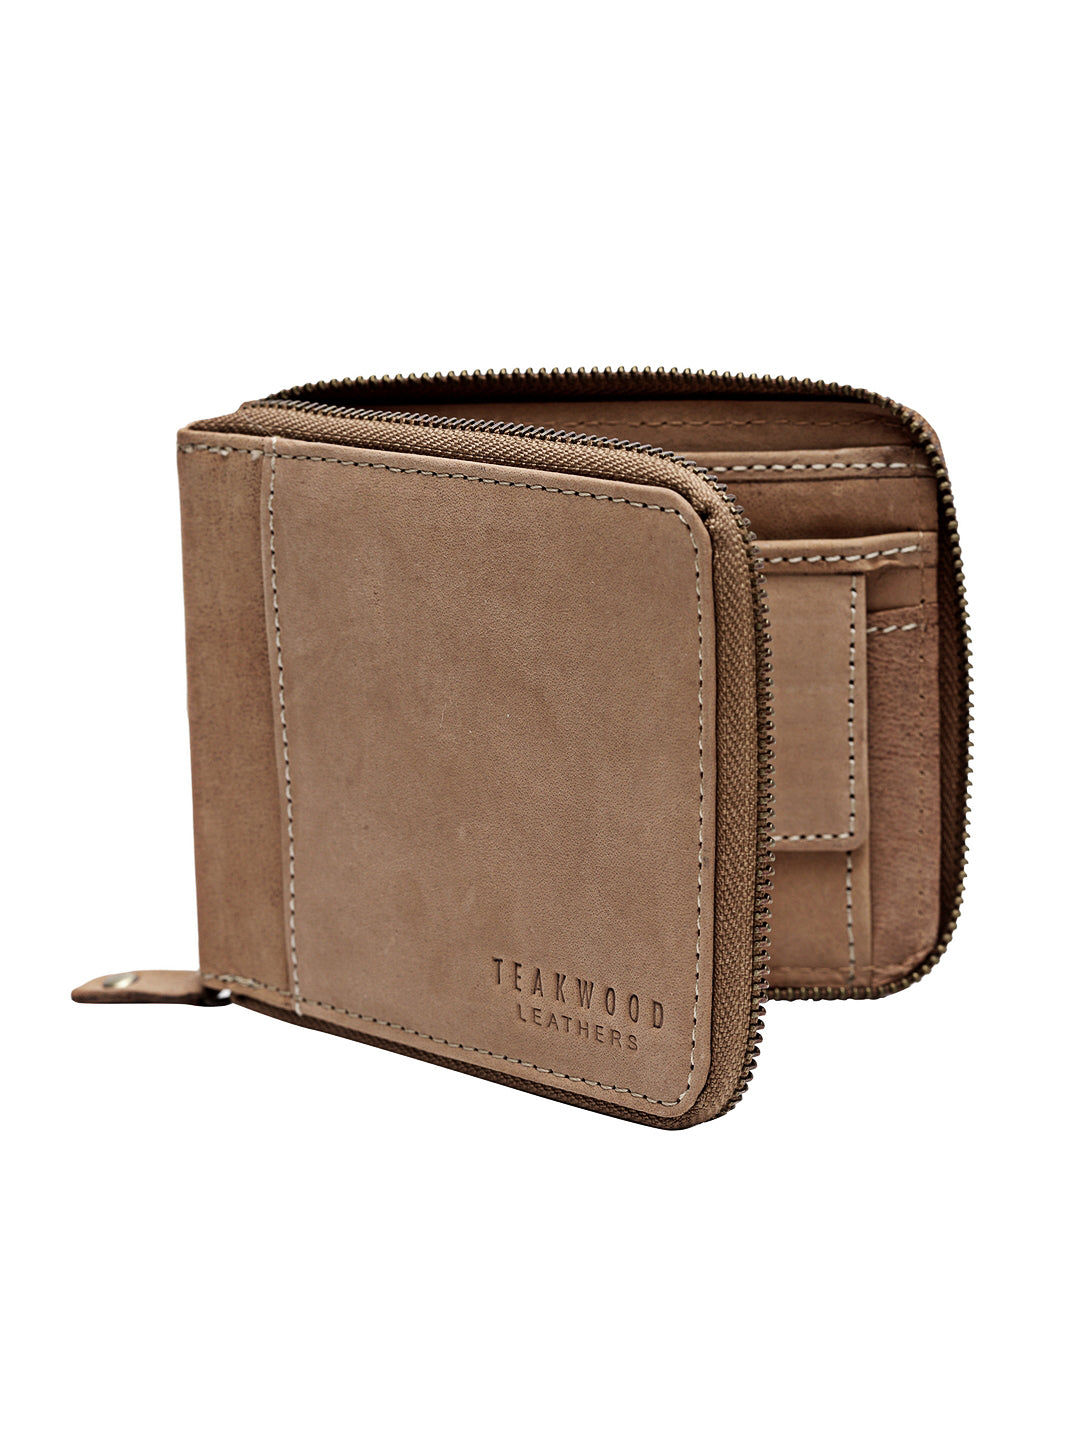 IVTG Genuine Leather Messenger Bag for Men Small Purse Crossbody Brown |  eBay